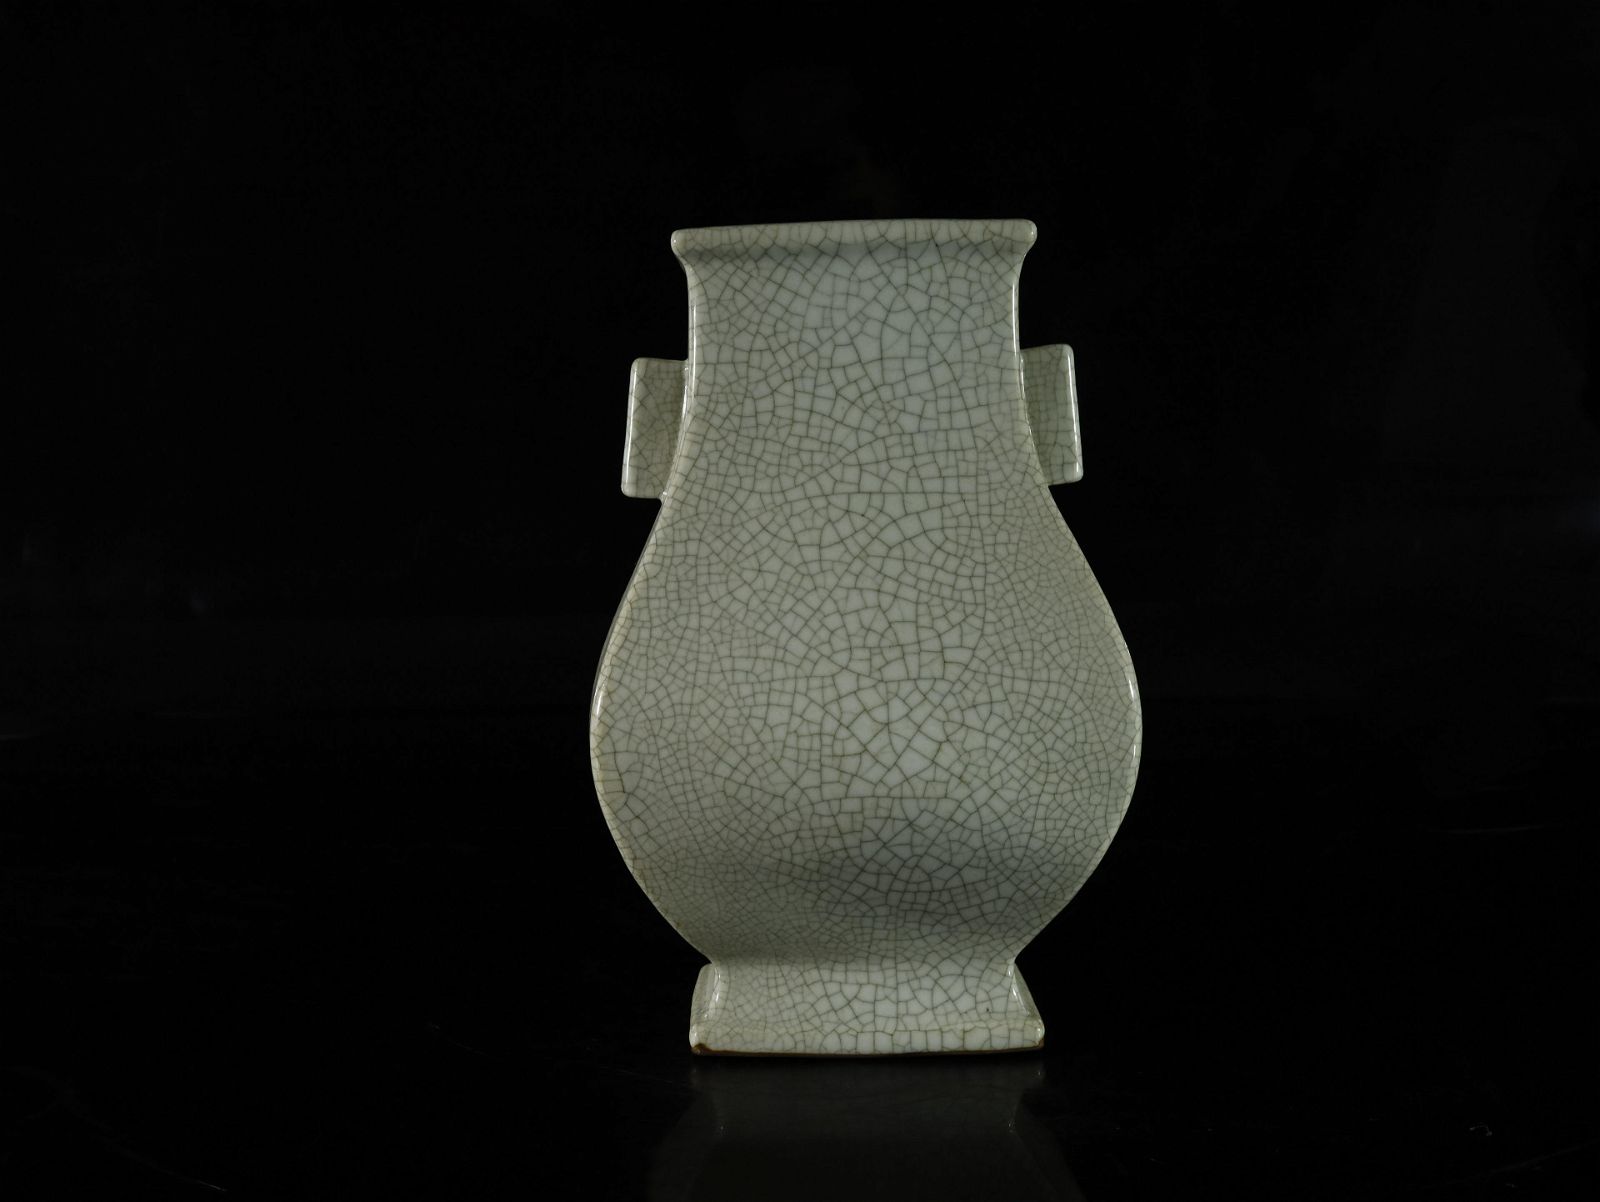 A GEYAO VASEA Geyao Vase Chinese 3d0d2d